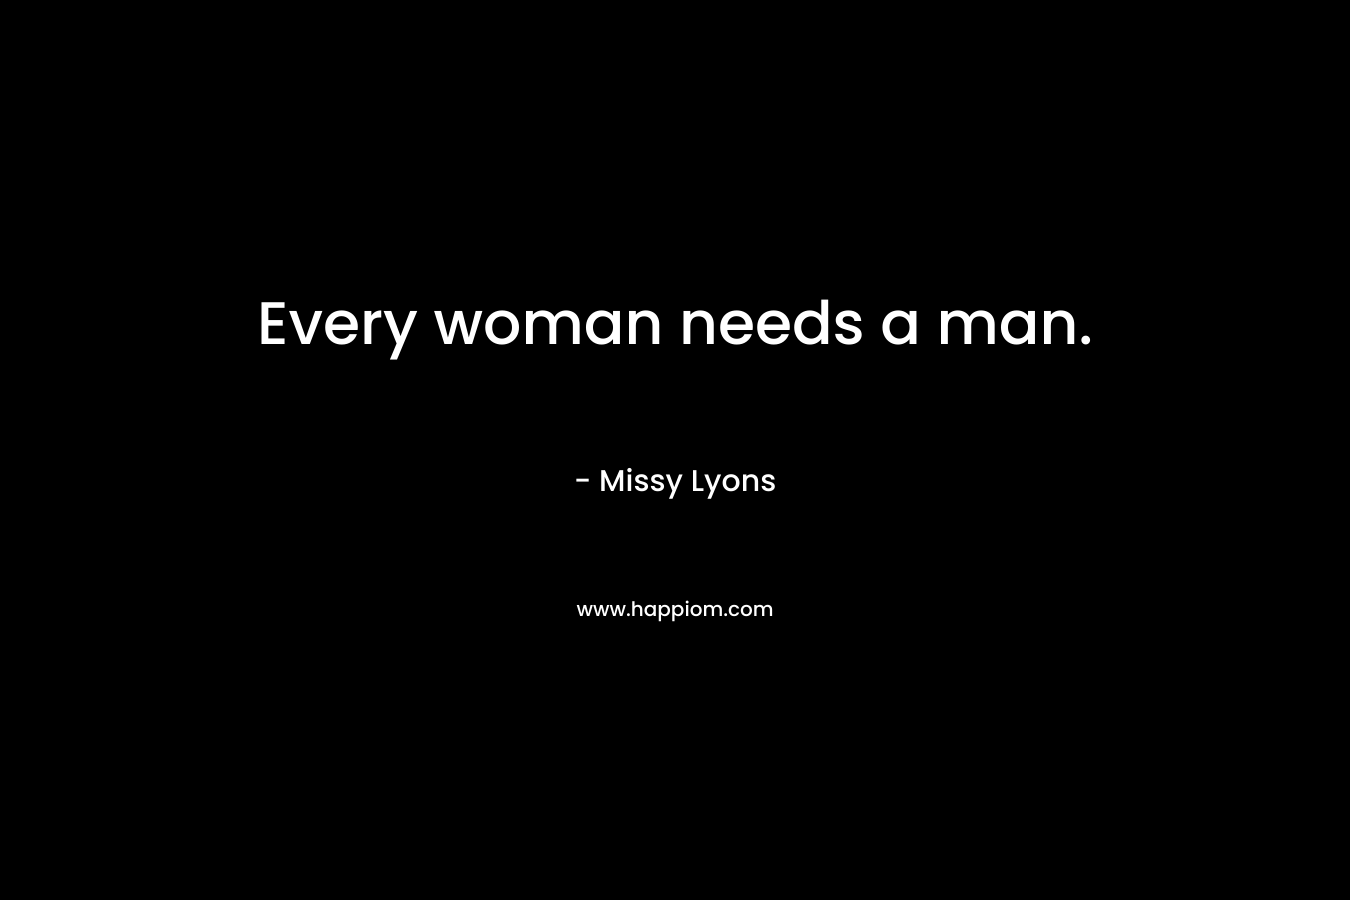 Every woman needs a man.